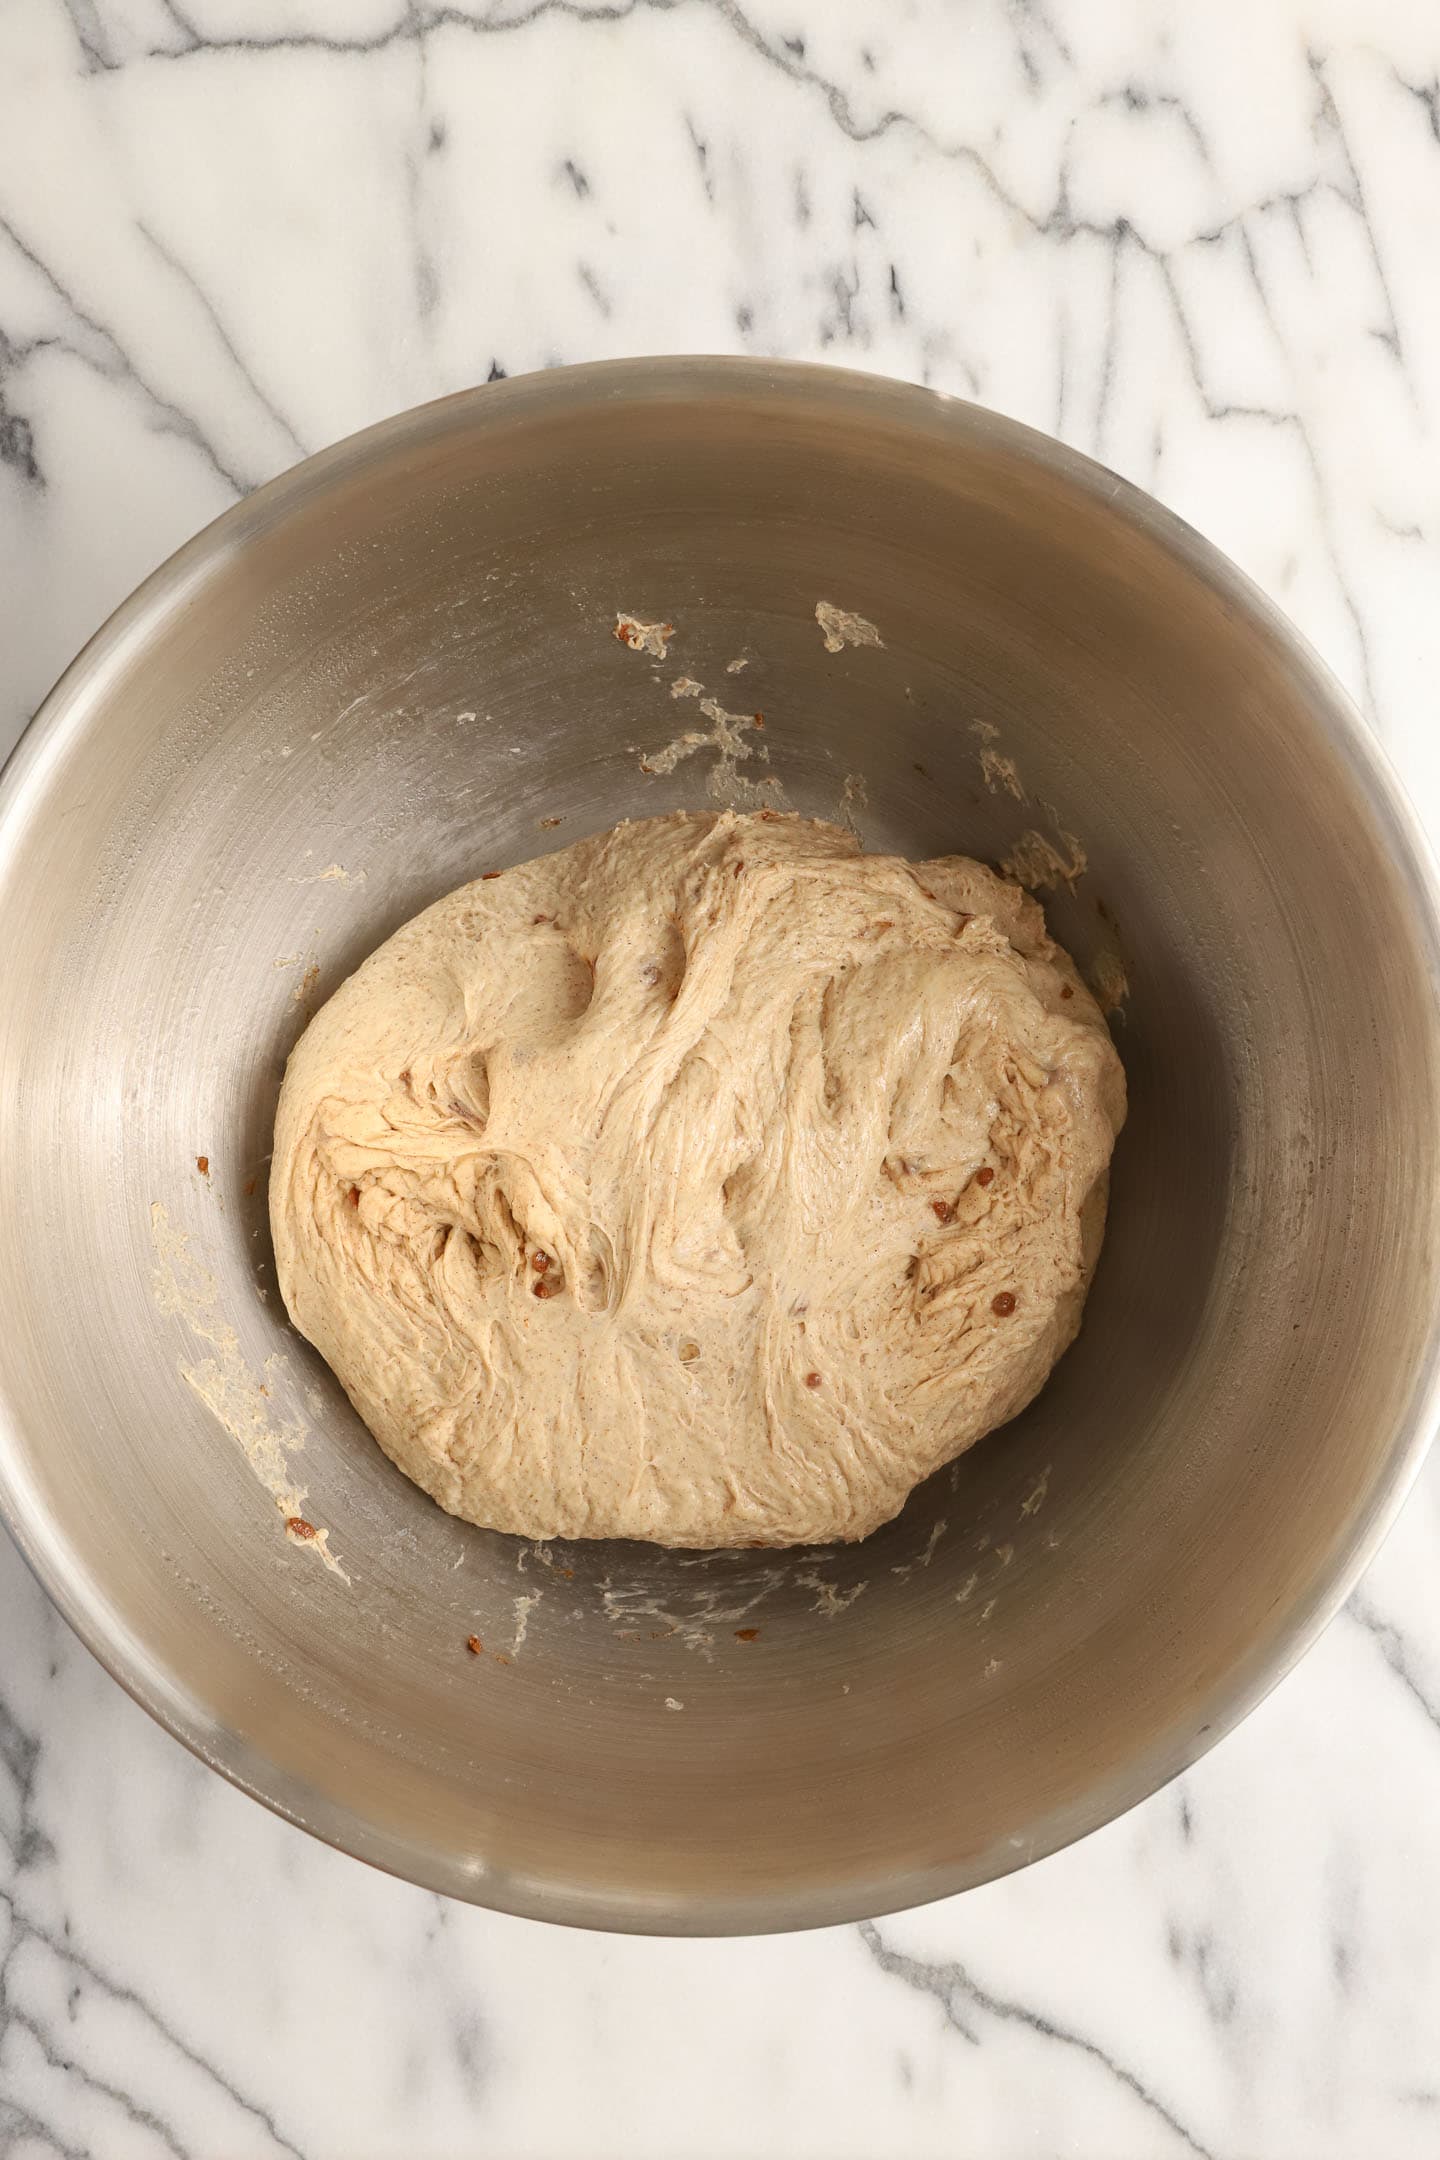 a large metal mixing bowl of cinnamon dough